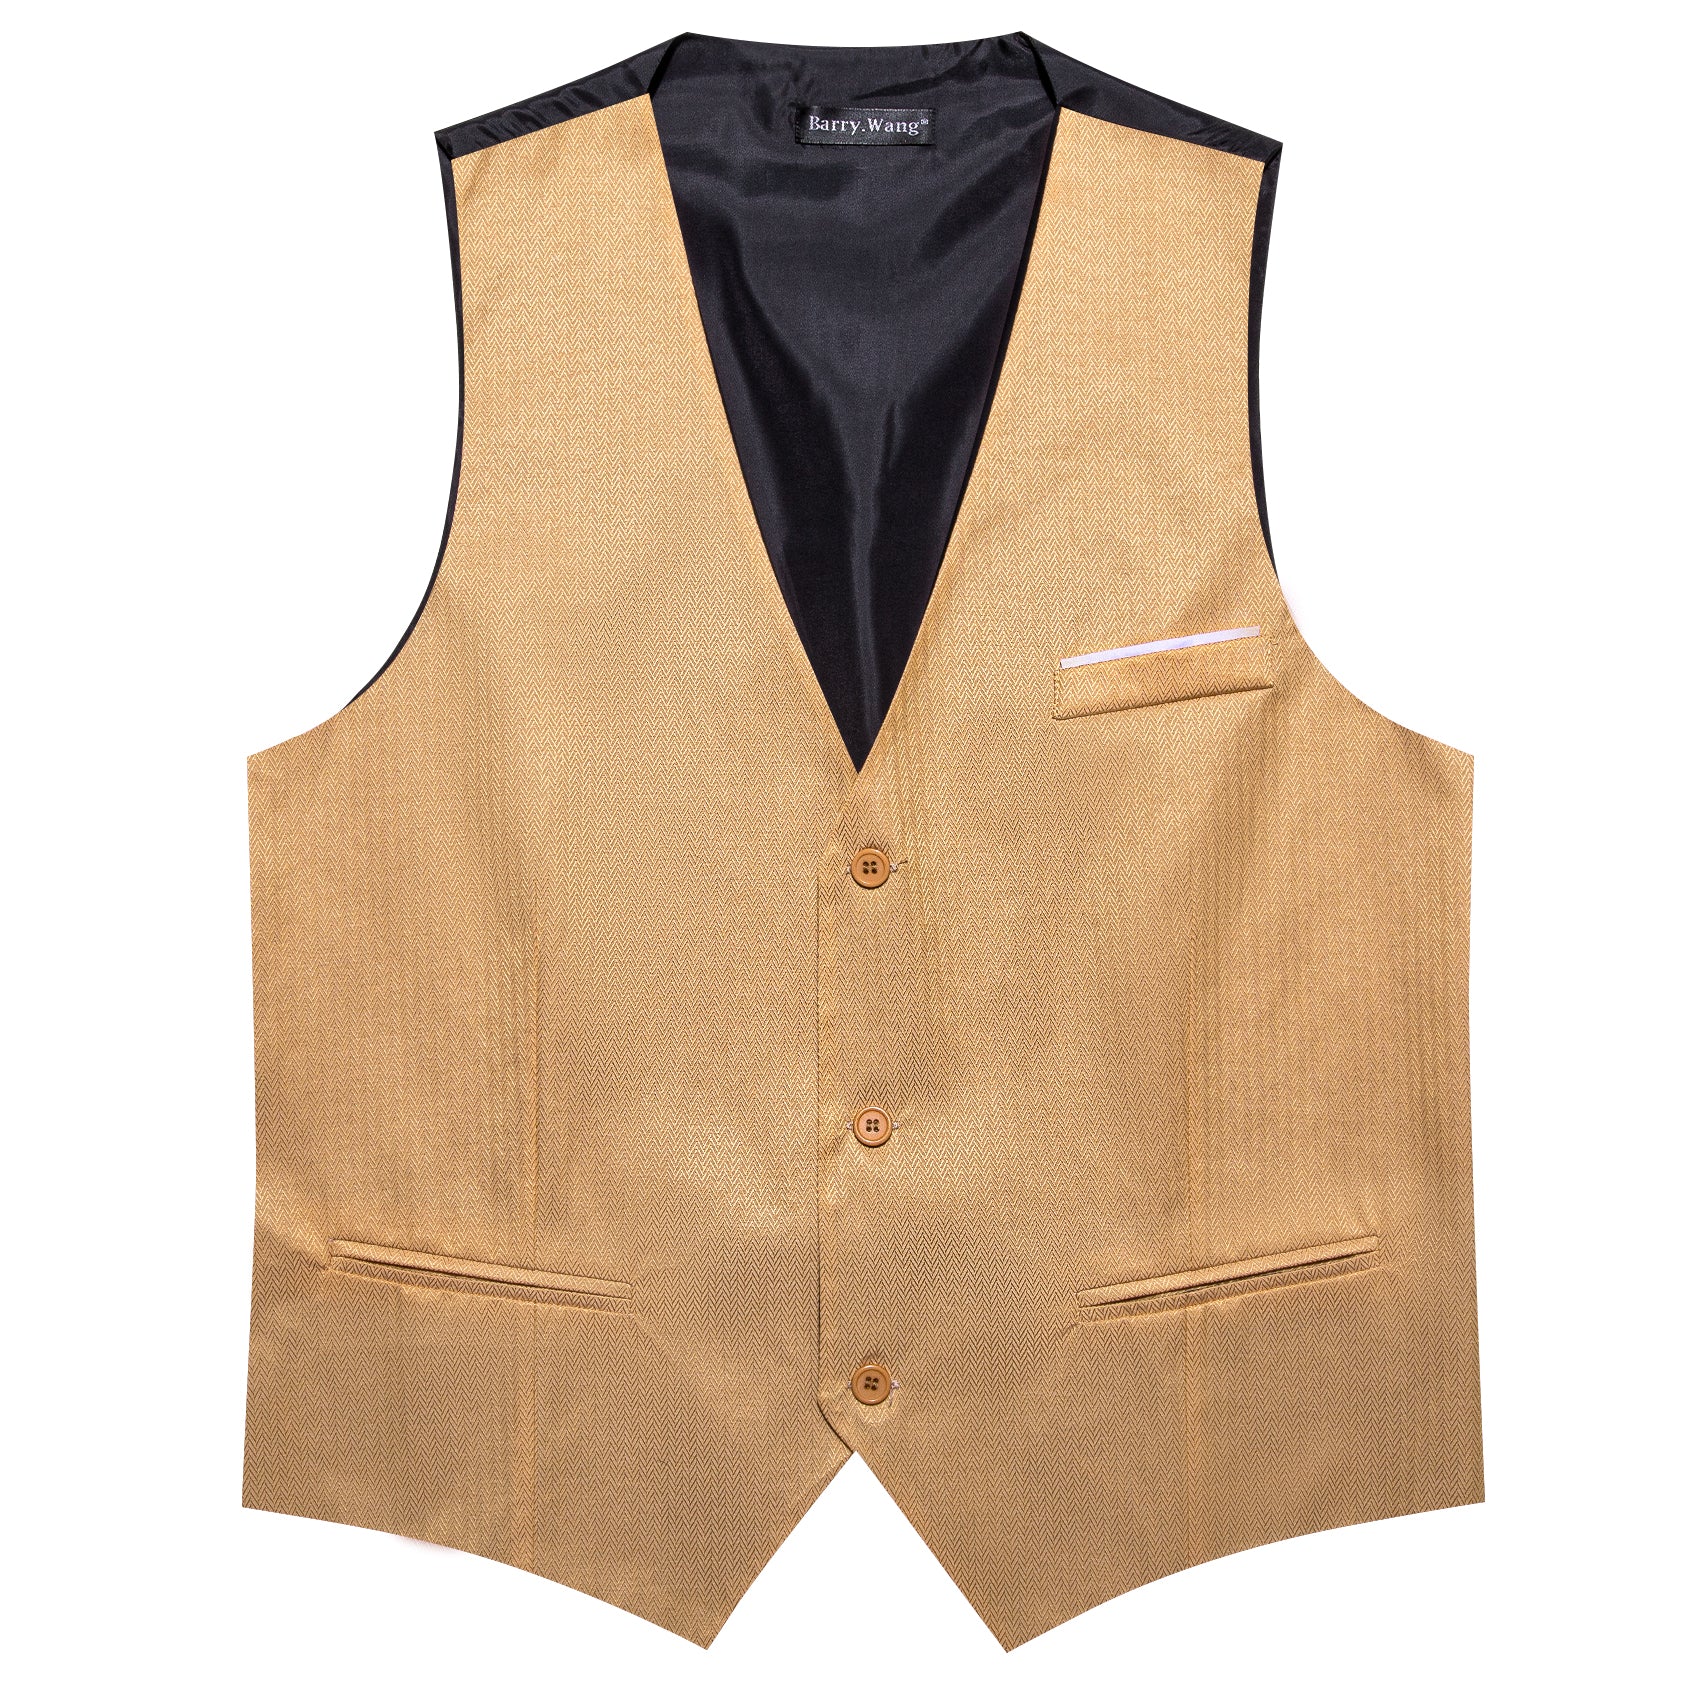 Men's Jasmine Solid Vest Suit for Business